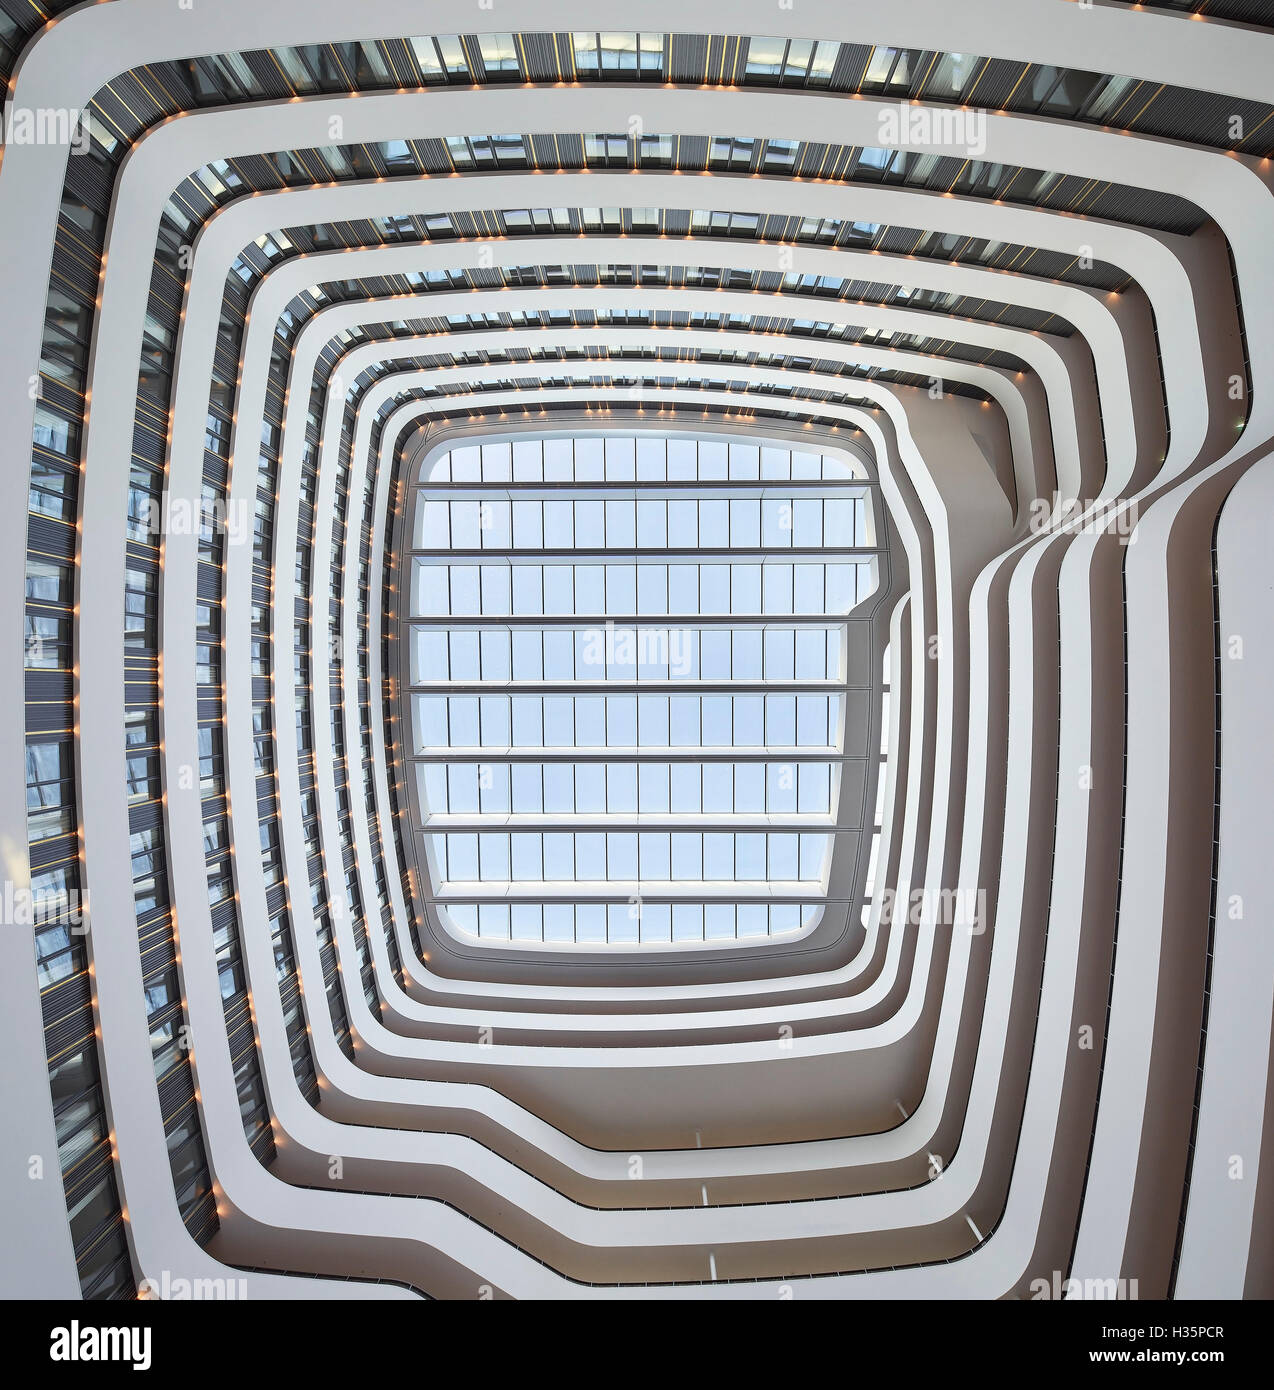 View towards atrium's glass ceiling. Hilton Amsterdam Airport Schiphol, Amsterdam, Netherlands. Architect: Mecanoo Architects, 2015. Stock Photo